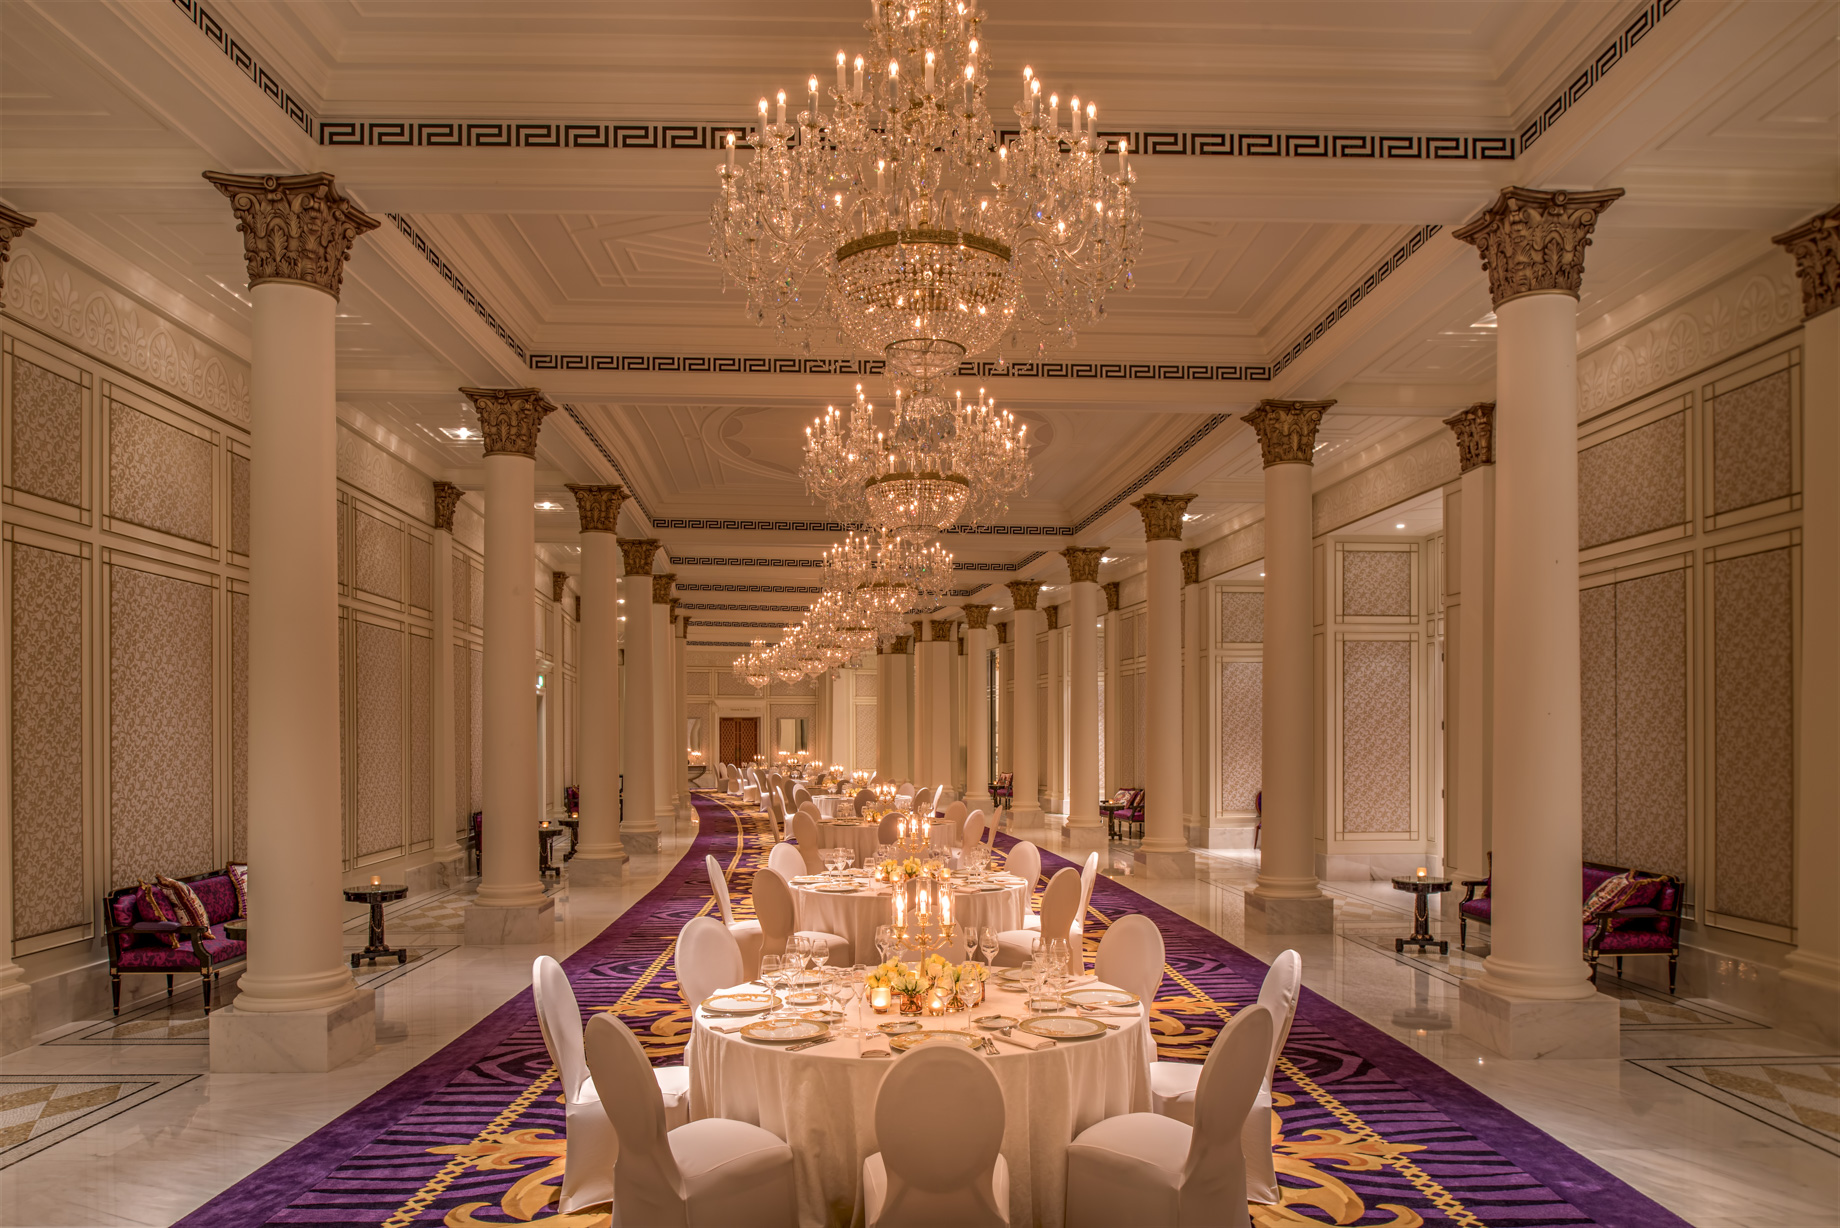 Palazzo Versace Dubai Hotel – Jaddaf Waterfront, Dubai, UAE – Pre Function Area Dining